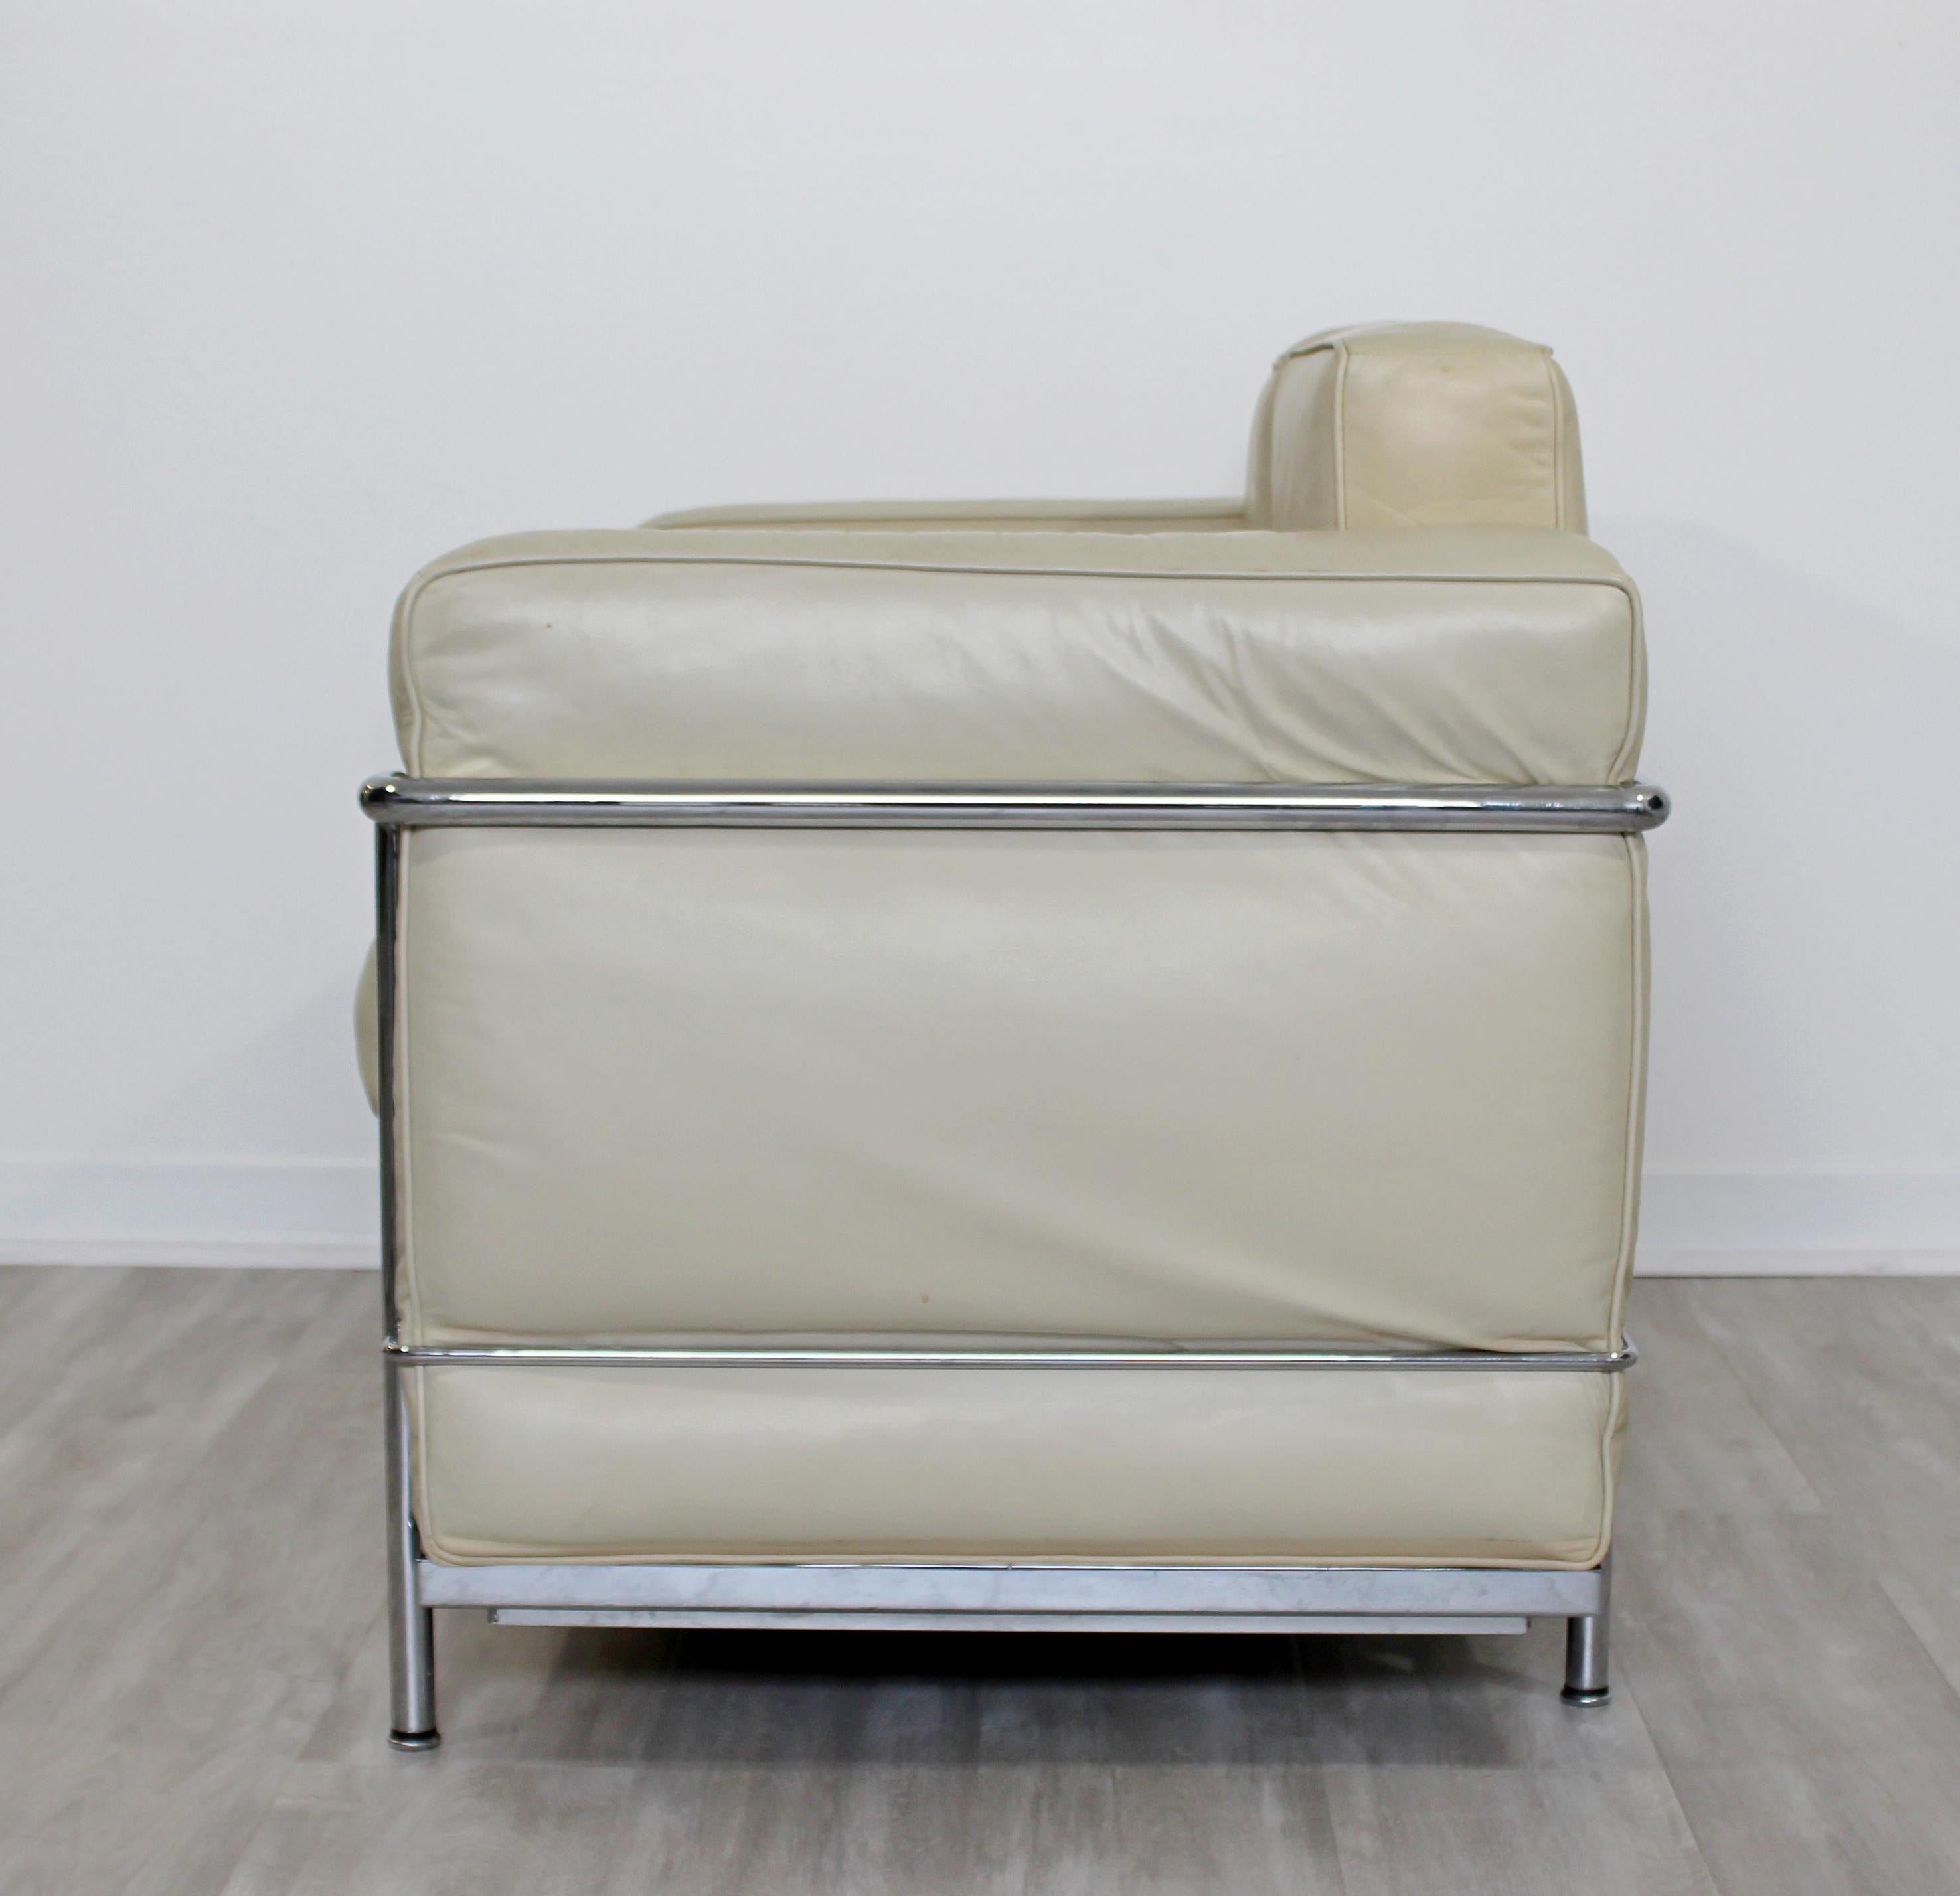 Italian Modern Contemporary Le Corbusier Cream Leather and Chrome Loveseat Sofa Italy